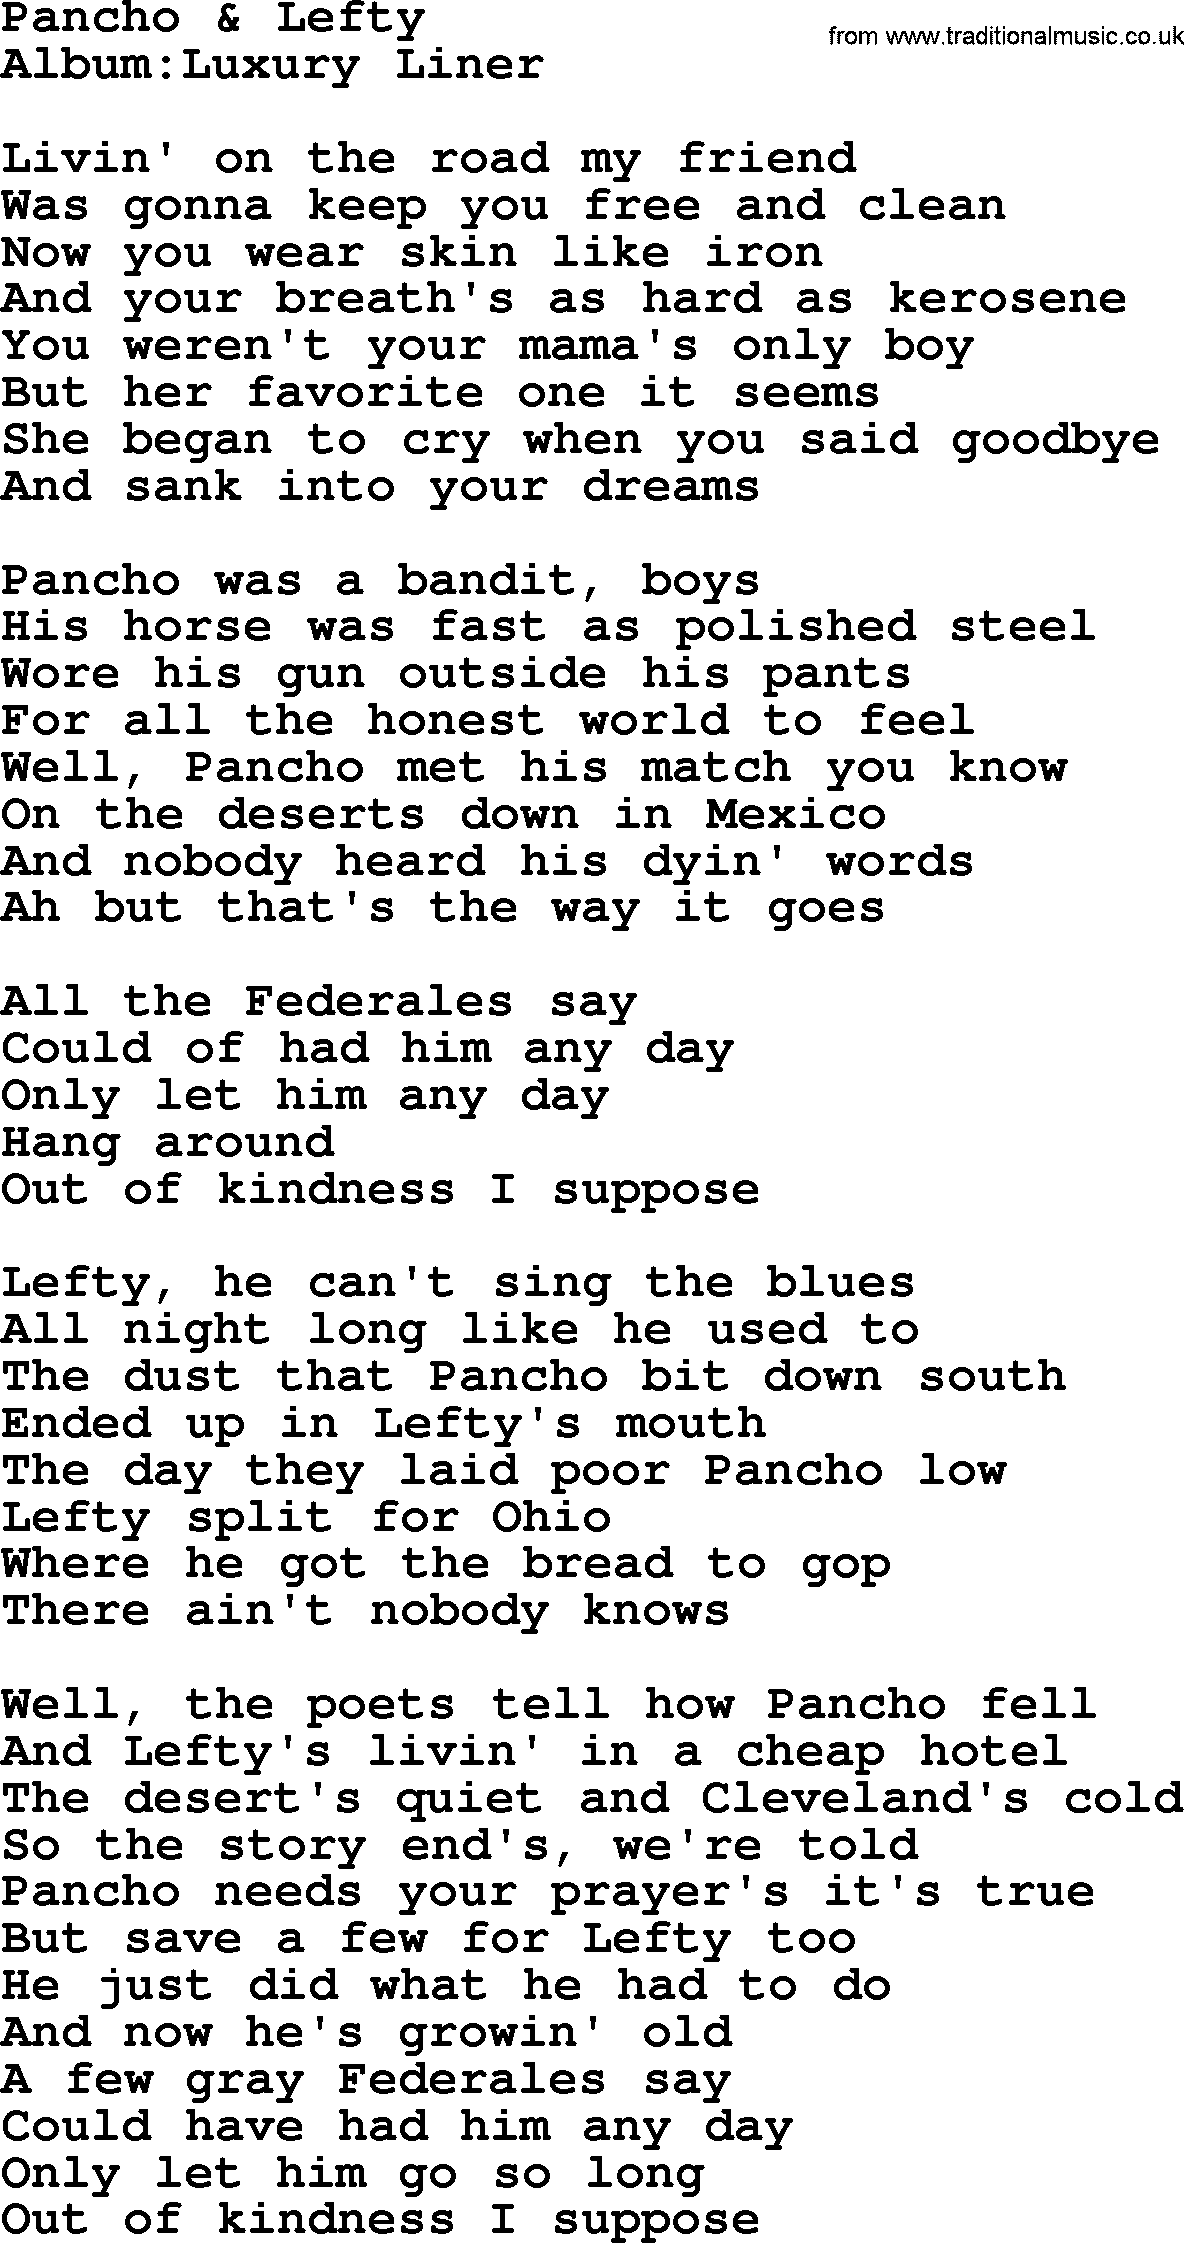 Emmylou Harris song: Pancho & Lefty lyrics